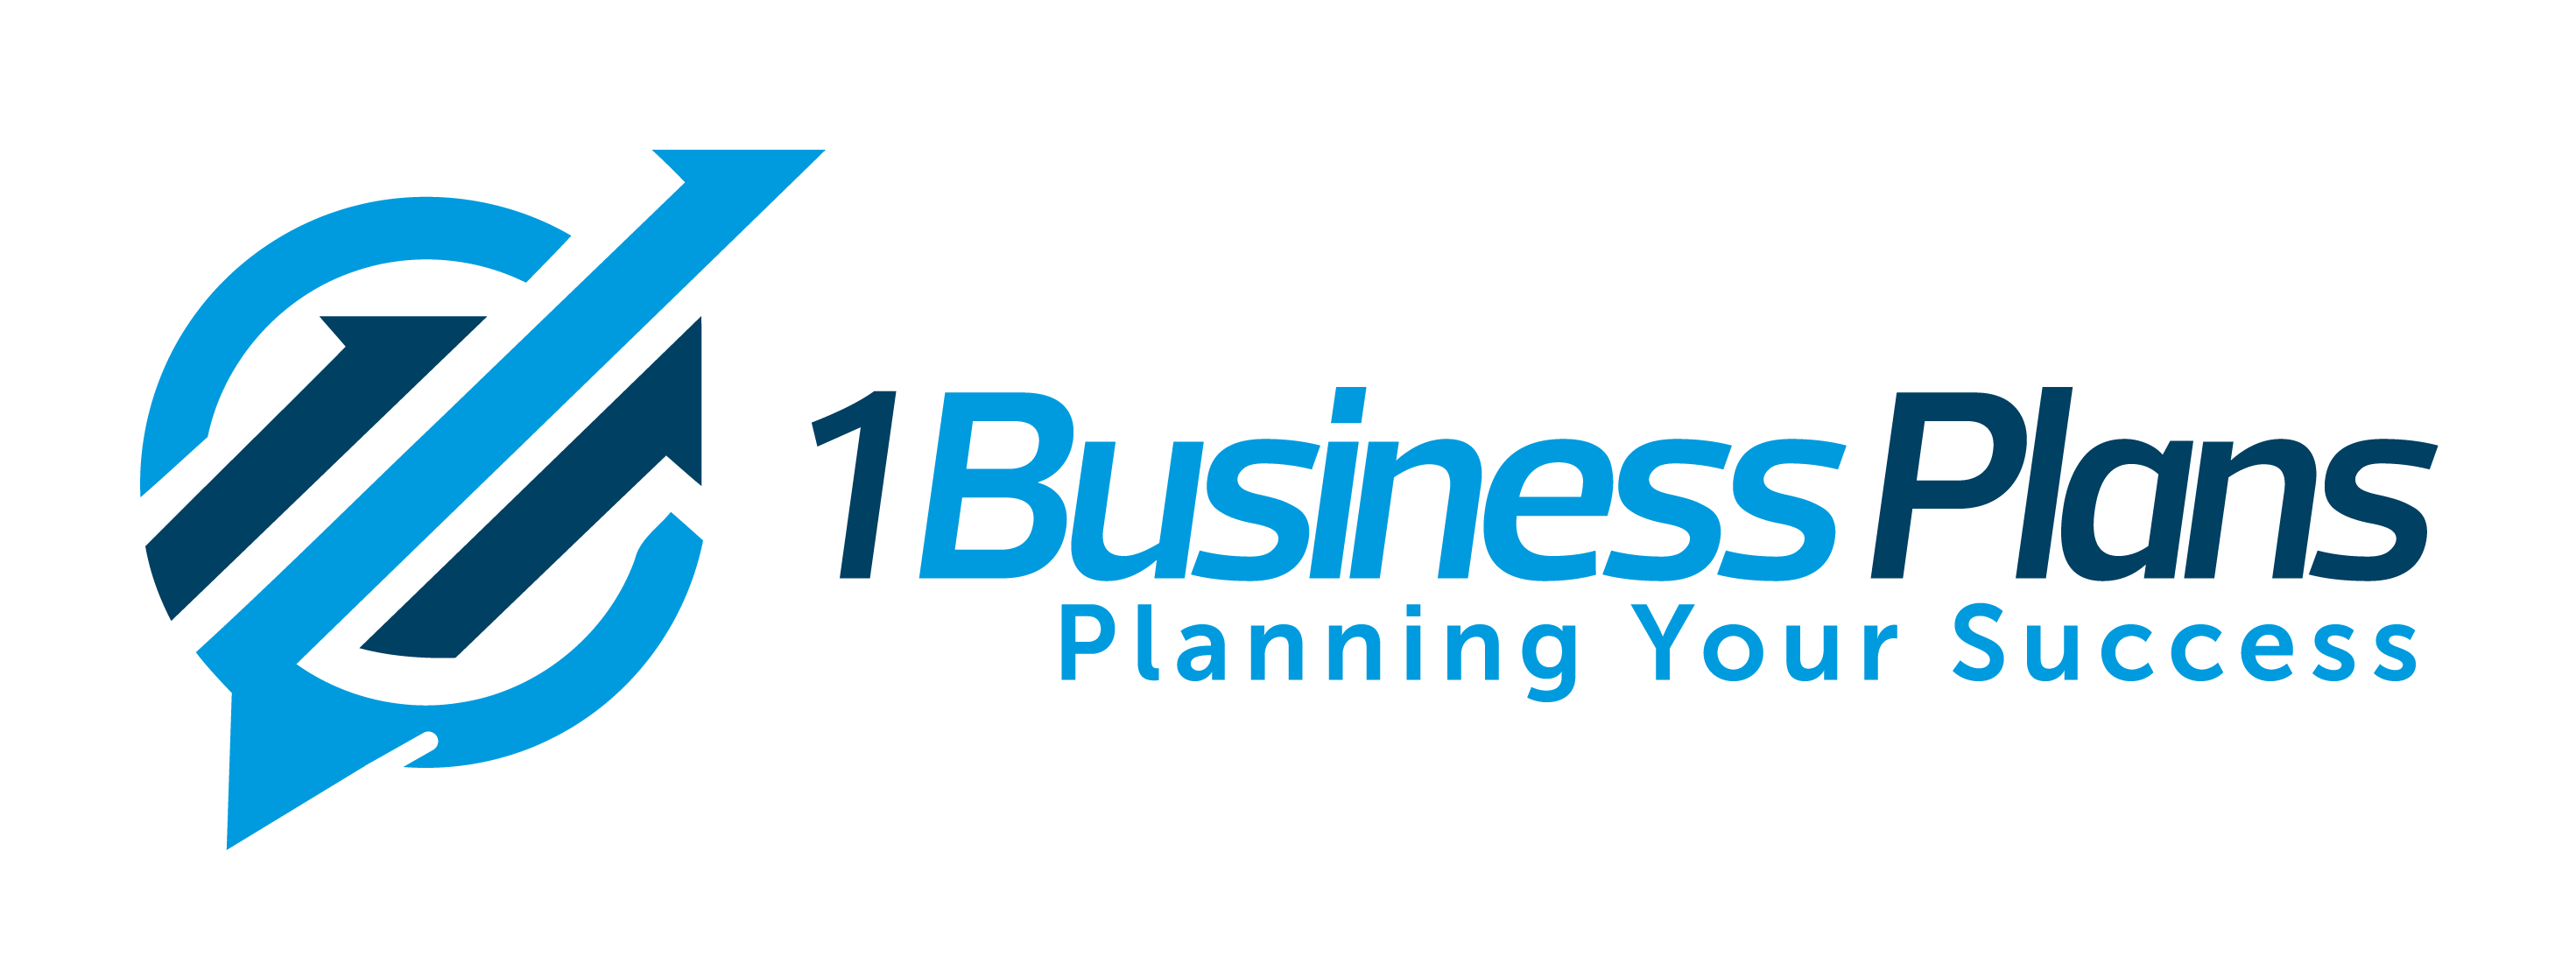 logo description in business plan